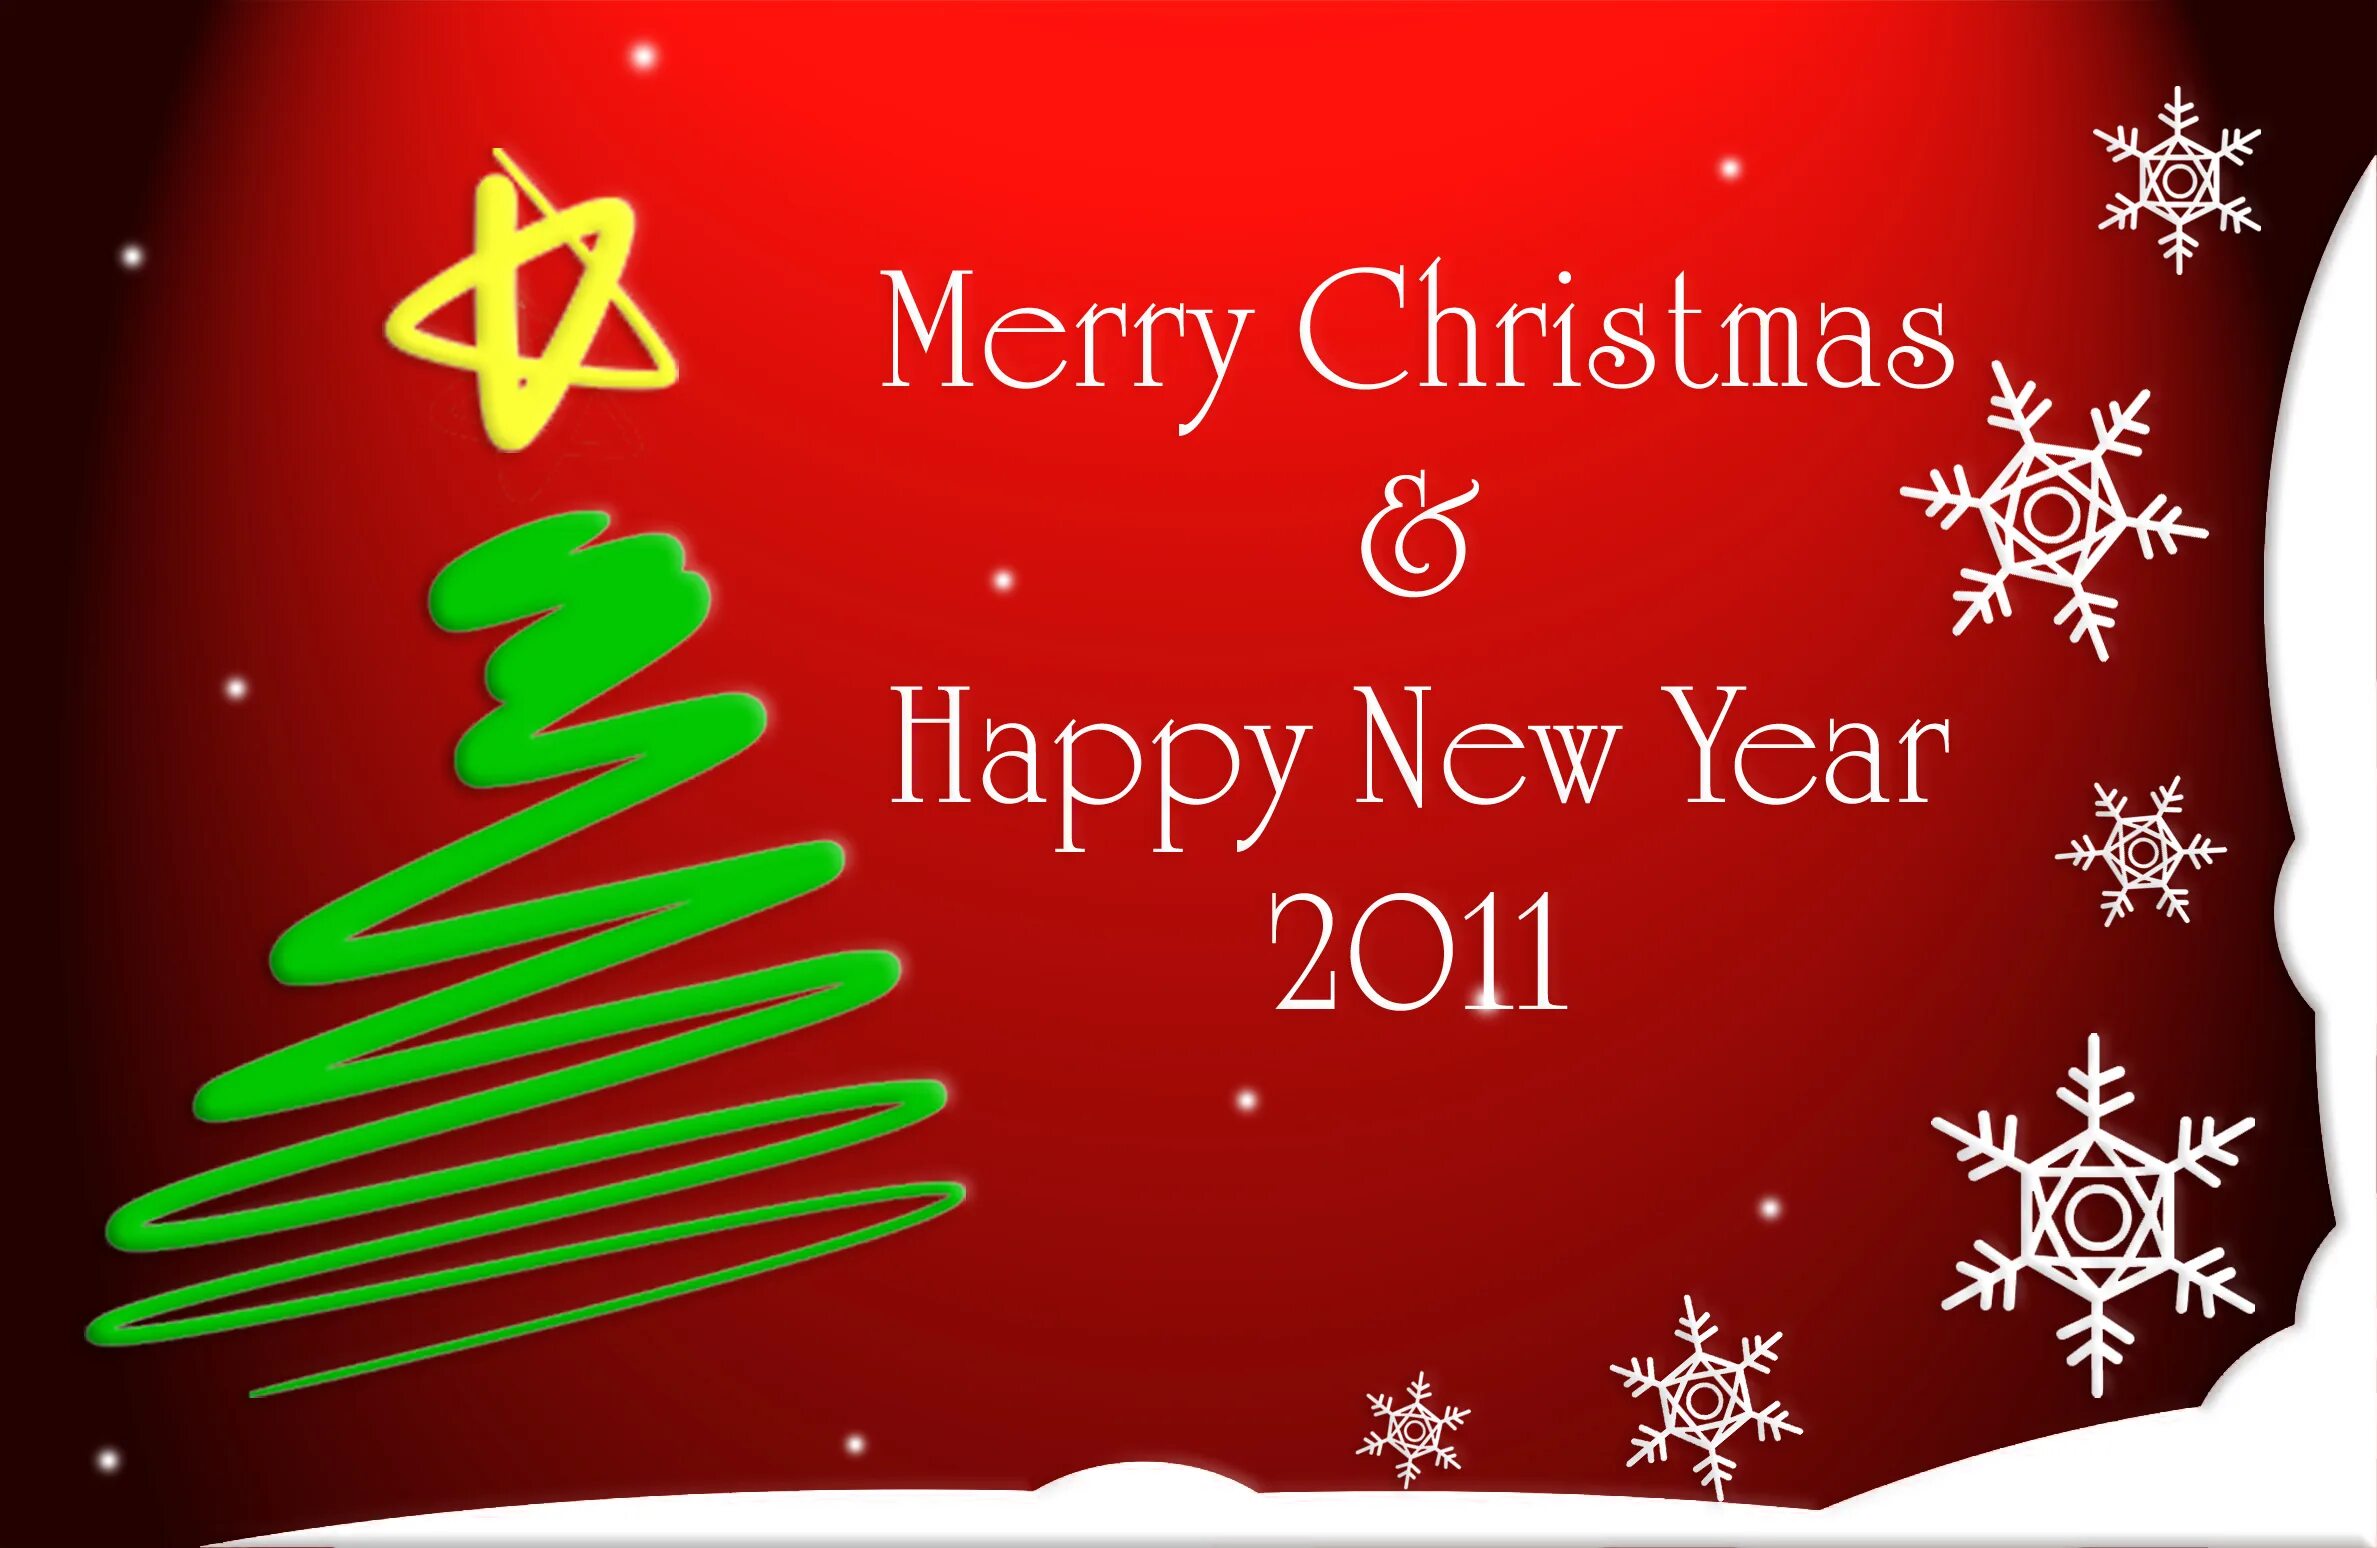 Happy new year be happy. Merry Christmas открытки. Новый год на английском. С новым годом по английскому. Открытка с новым годом на англ языке.